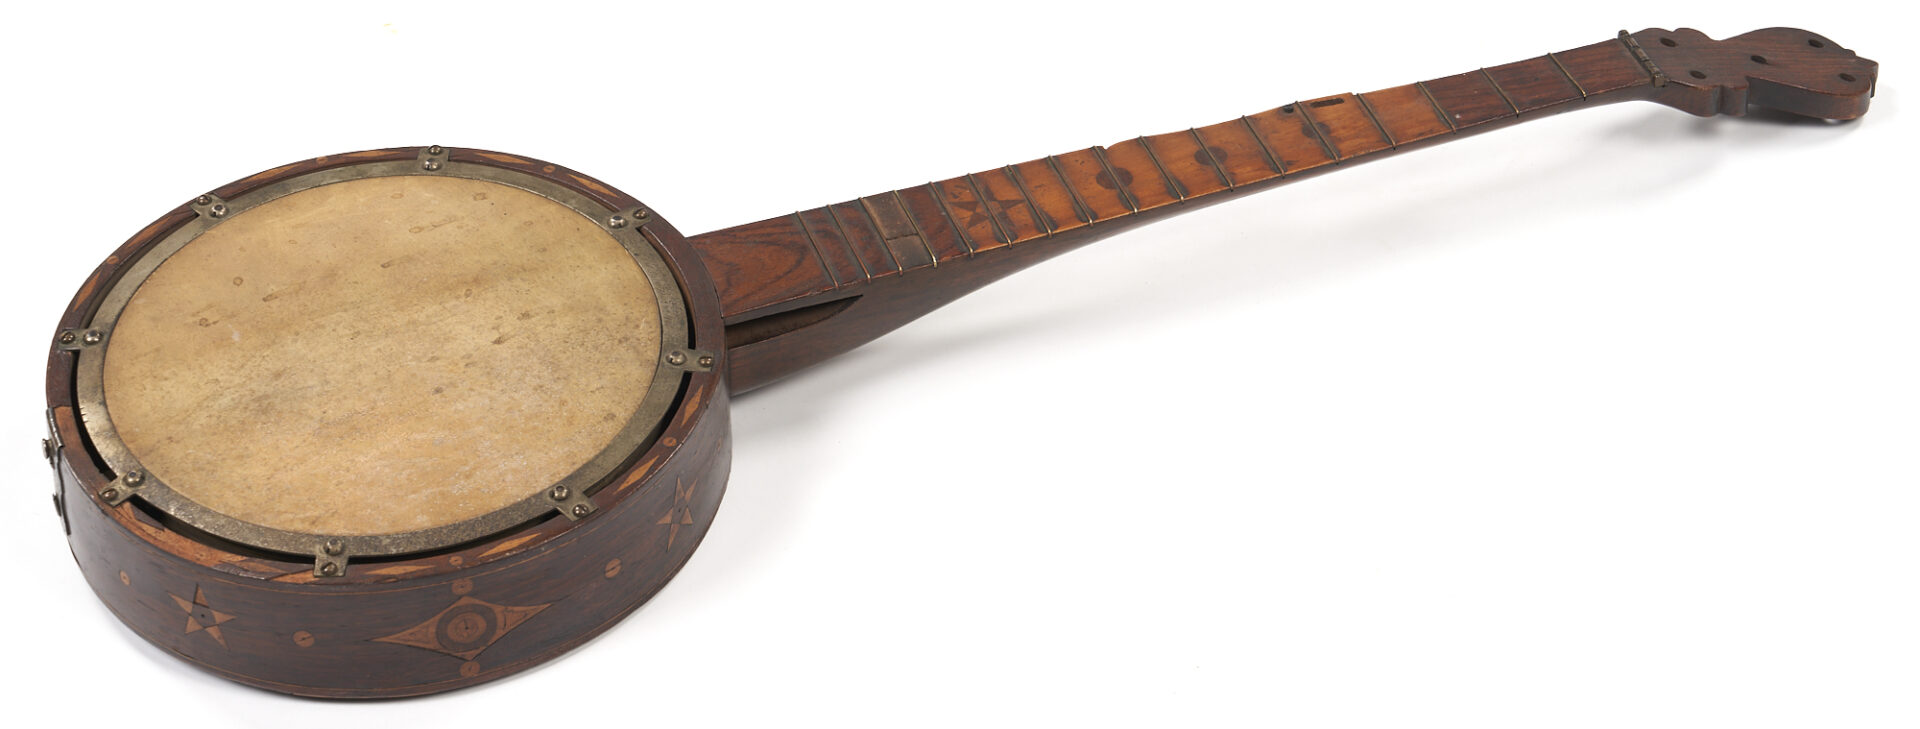 Lot 178: George Teed Inlaid Six-String Banjo